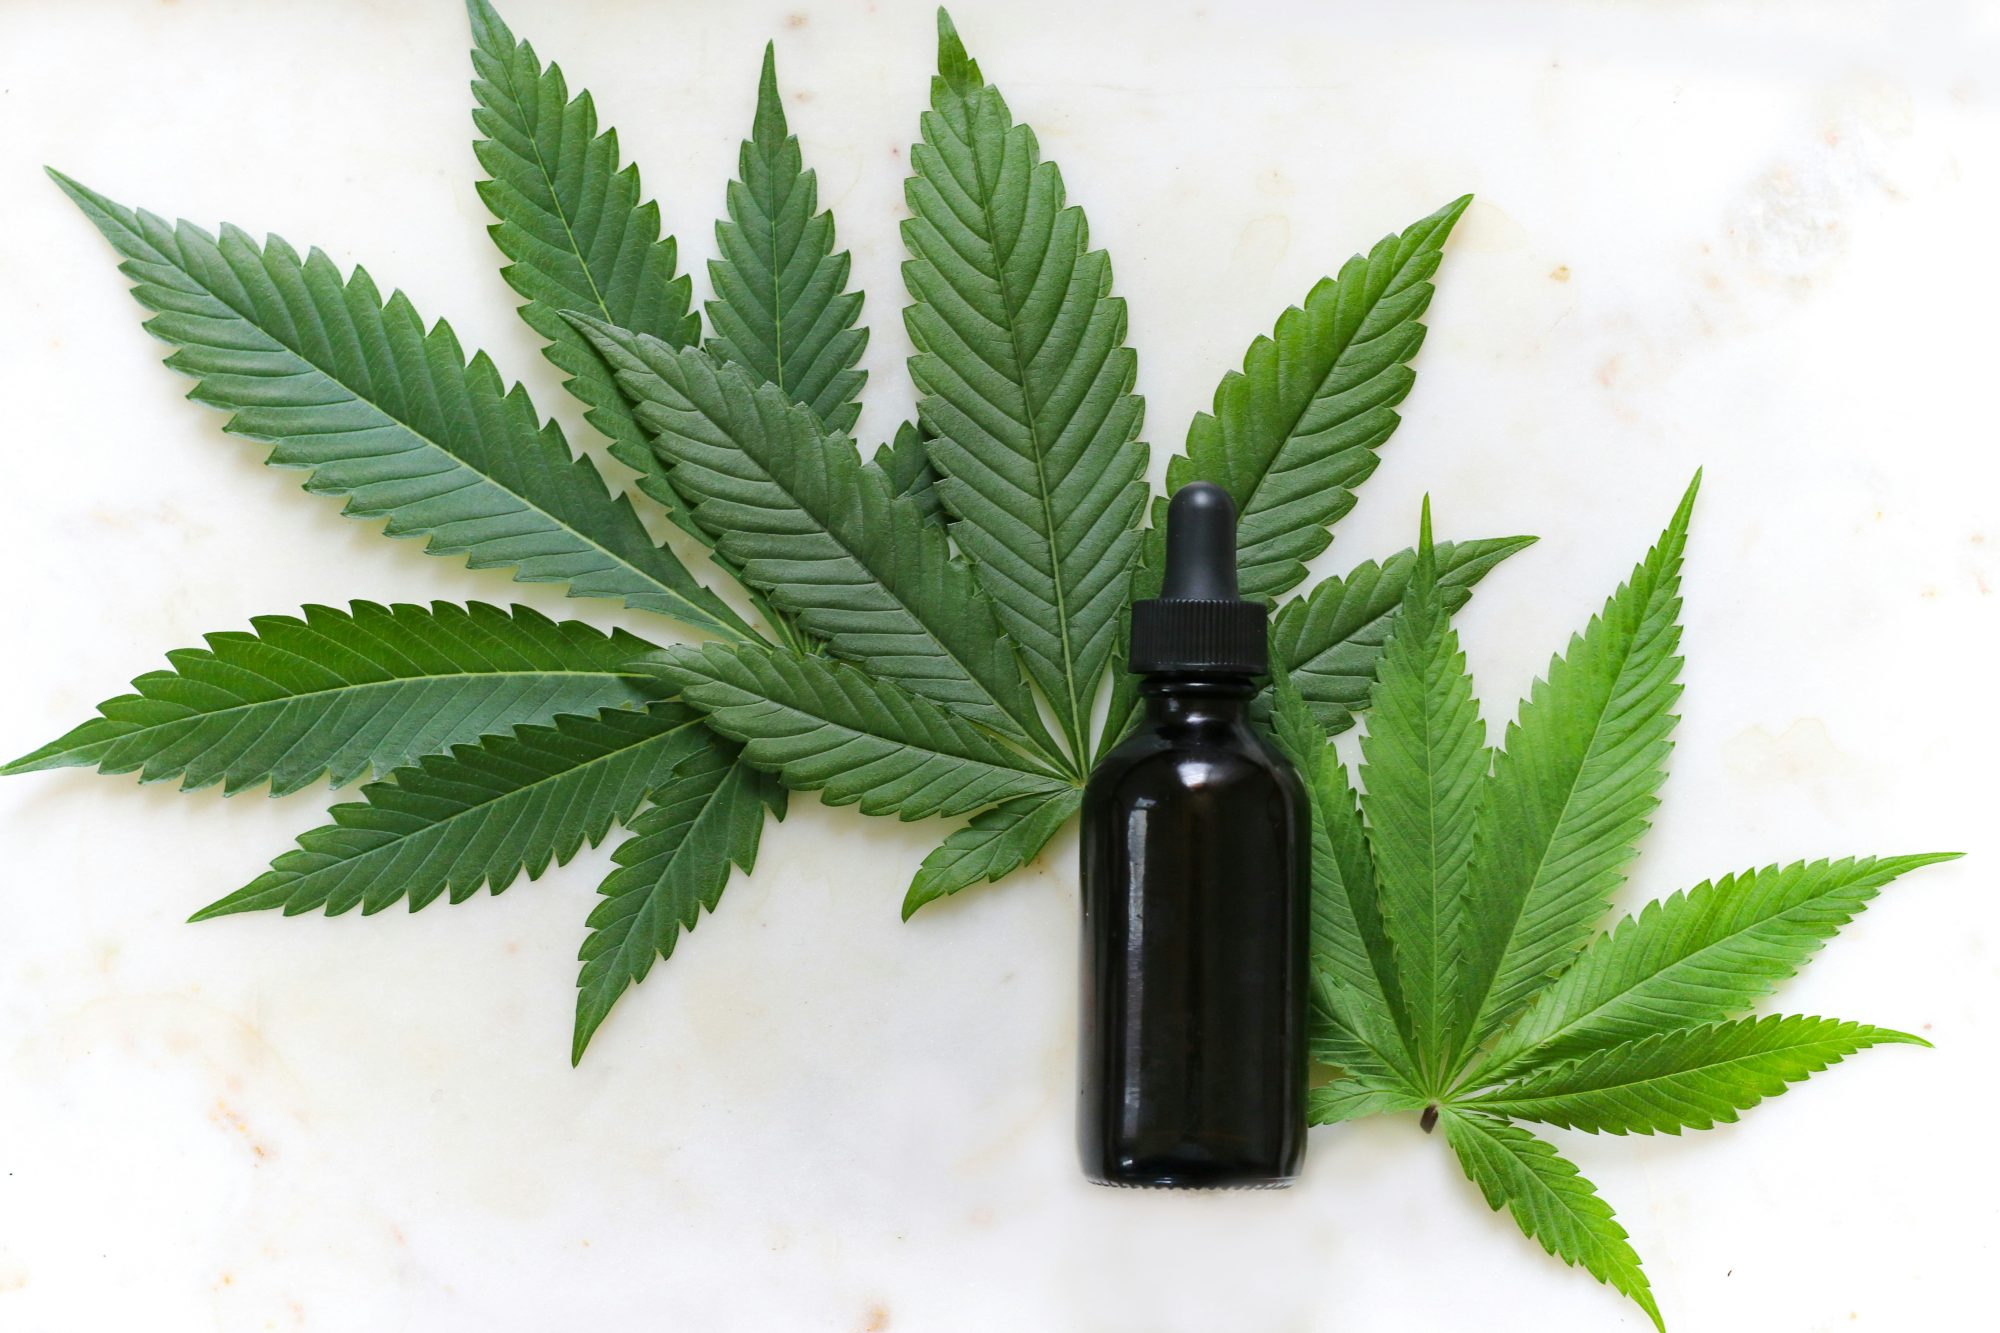 Bottle with medical marijuana - How to grow medical marijuana